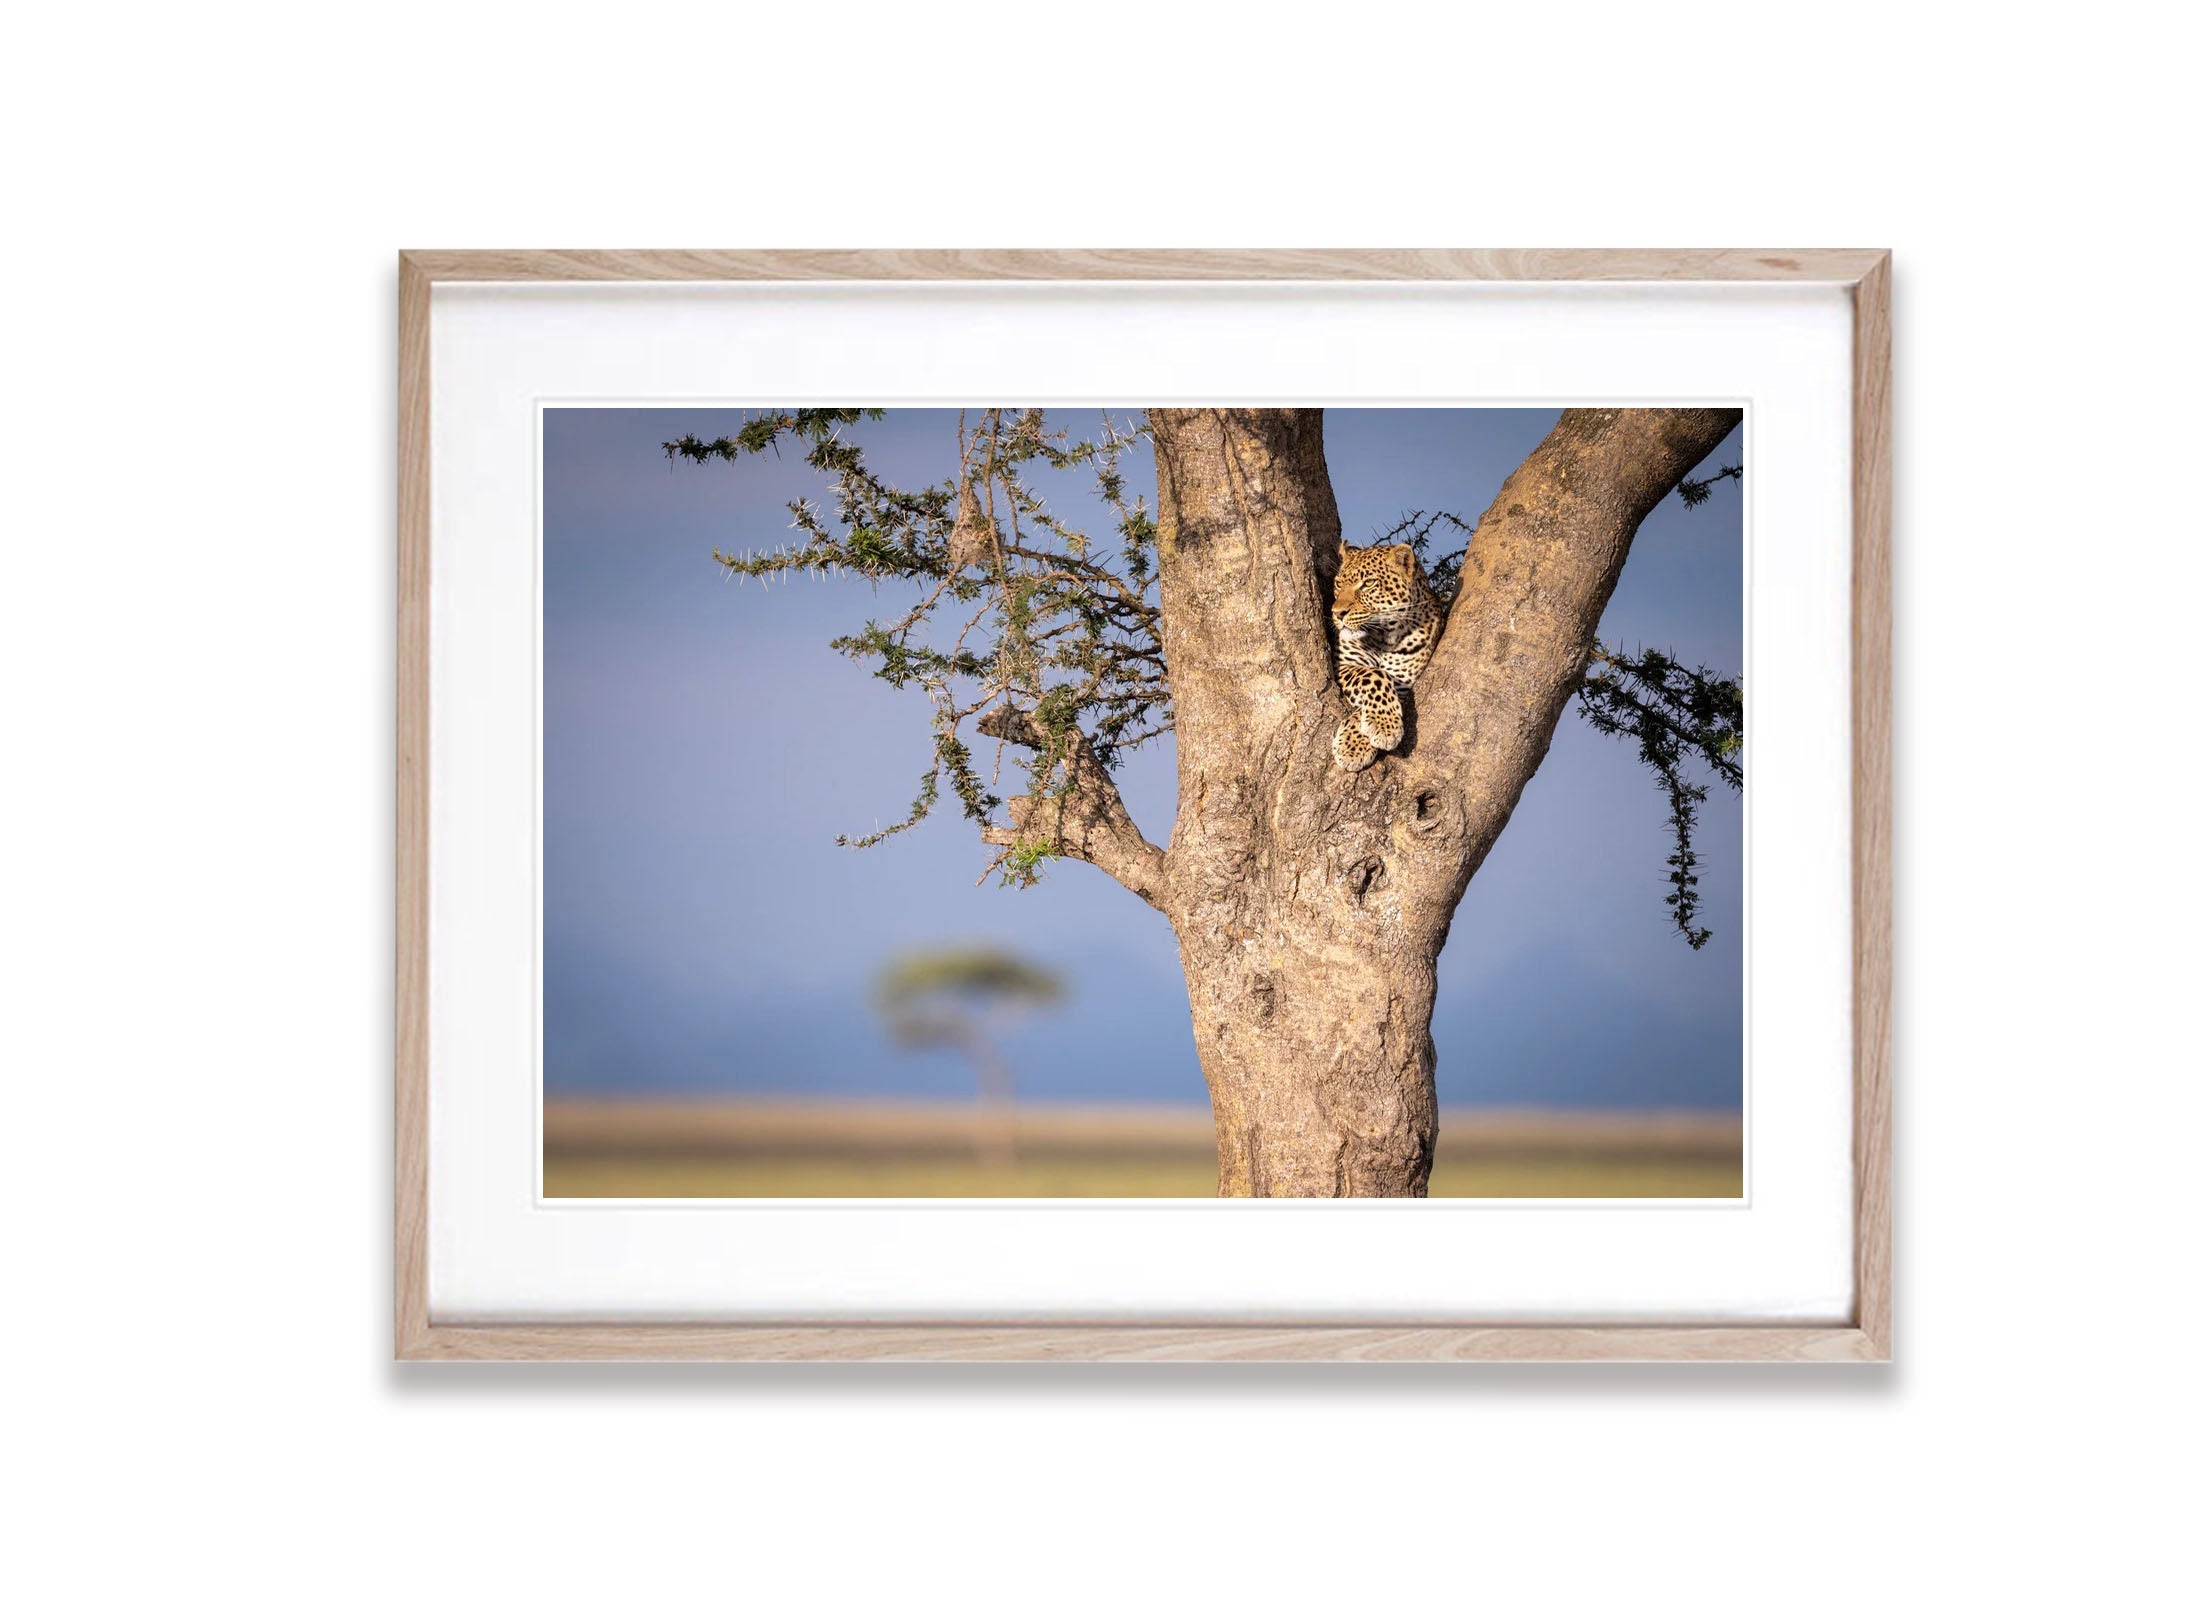 ARTWORK INSTOCK - The Leopard - Canvas Raw Oak Framed print 150x100cms